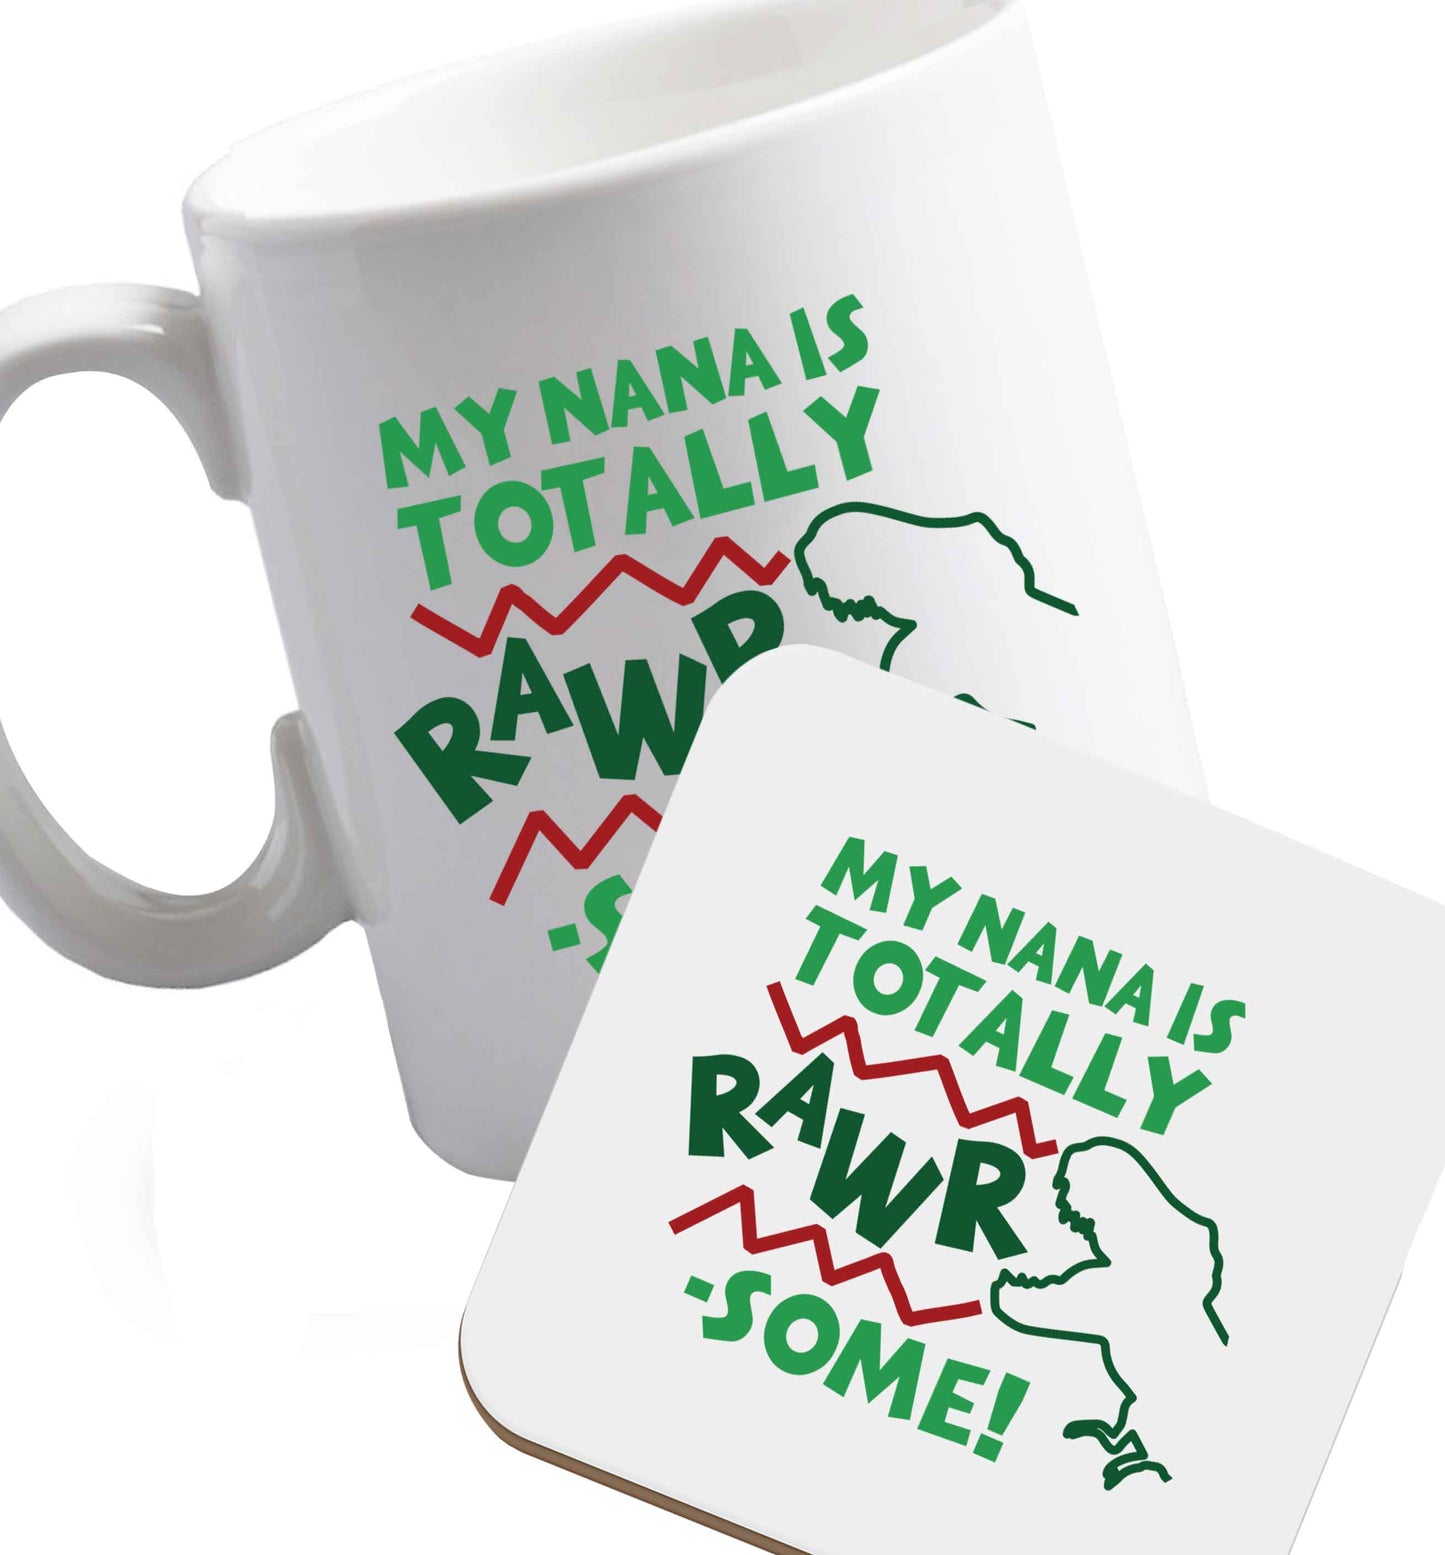 10 oz My nana is totally rawrsome ceramic mug and coaster set right handed